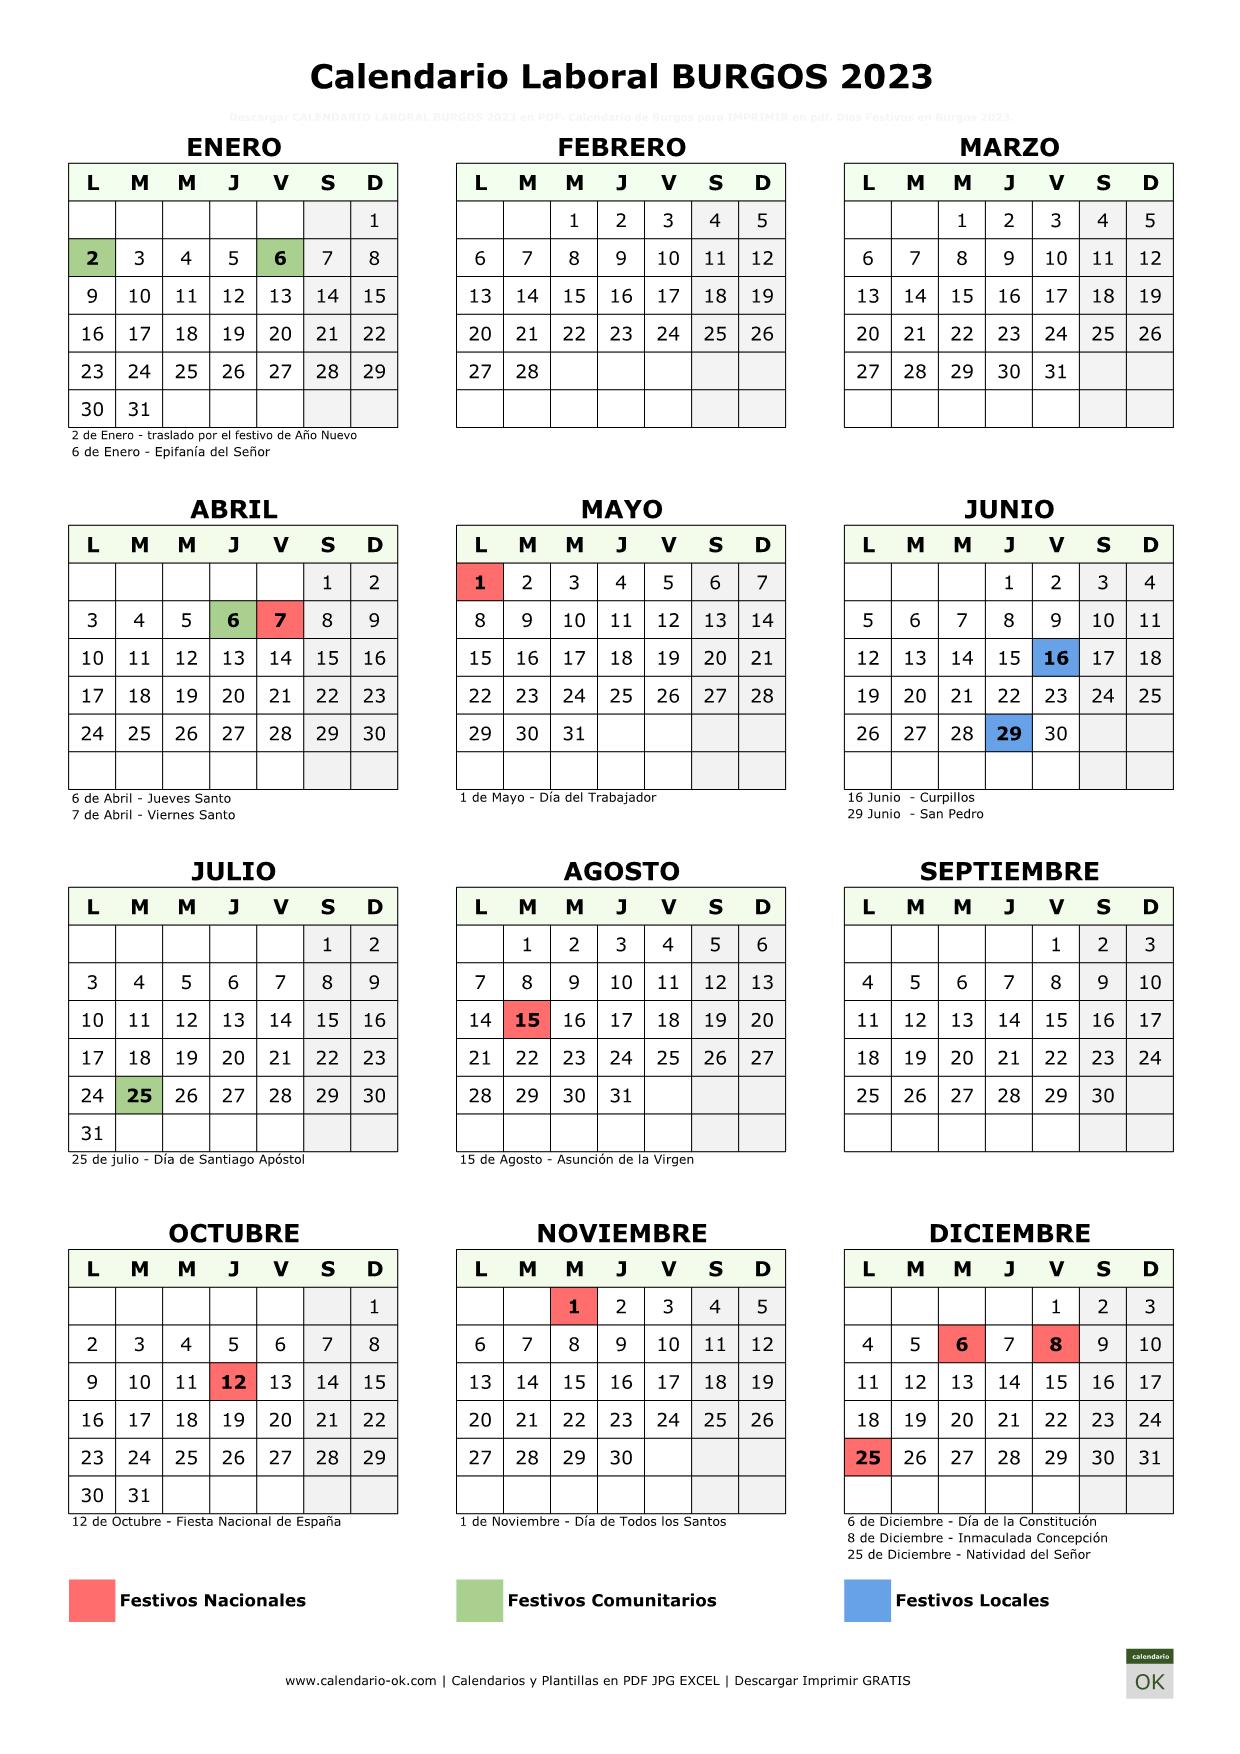 Calendario Laboral Burgos 2023 vertical